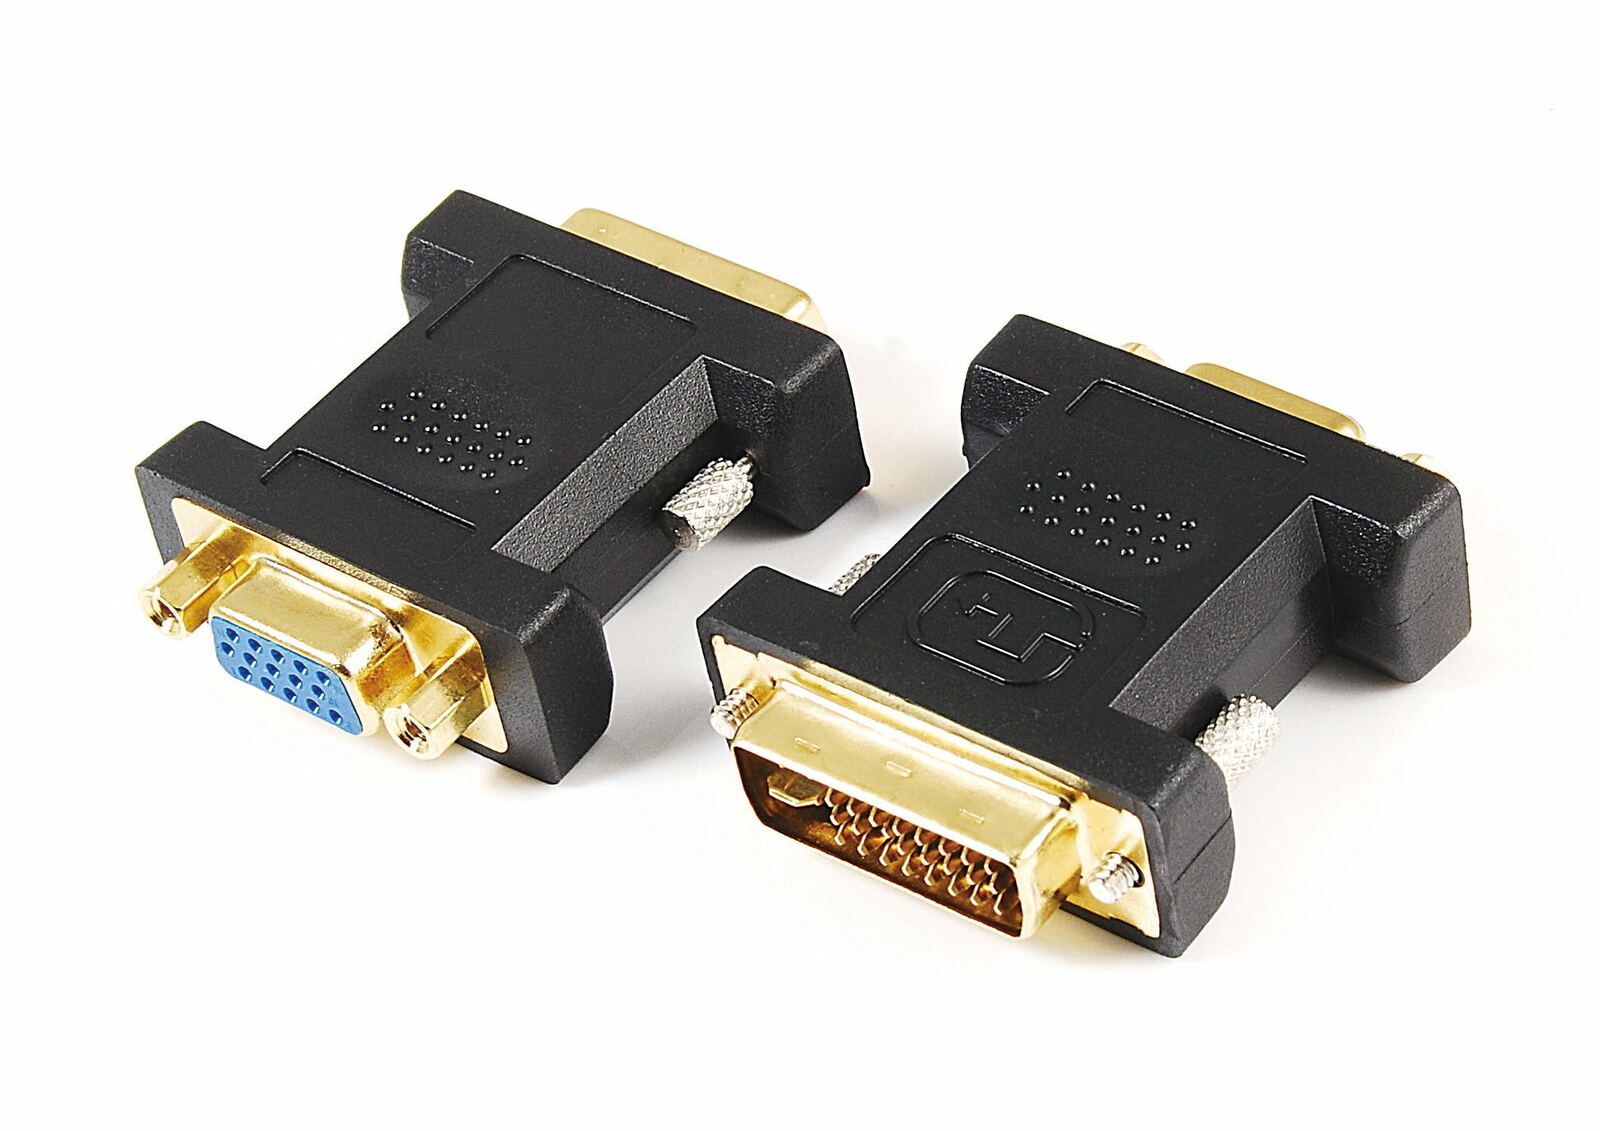 DVI Male Plug to VGA Female Socket Adaptor Converter